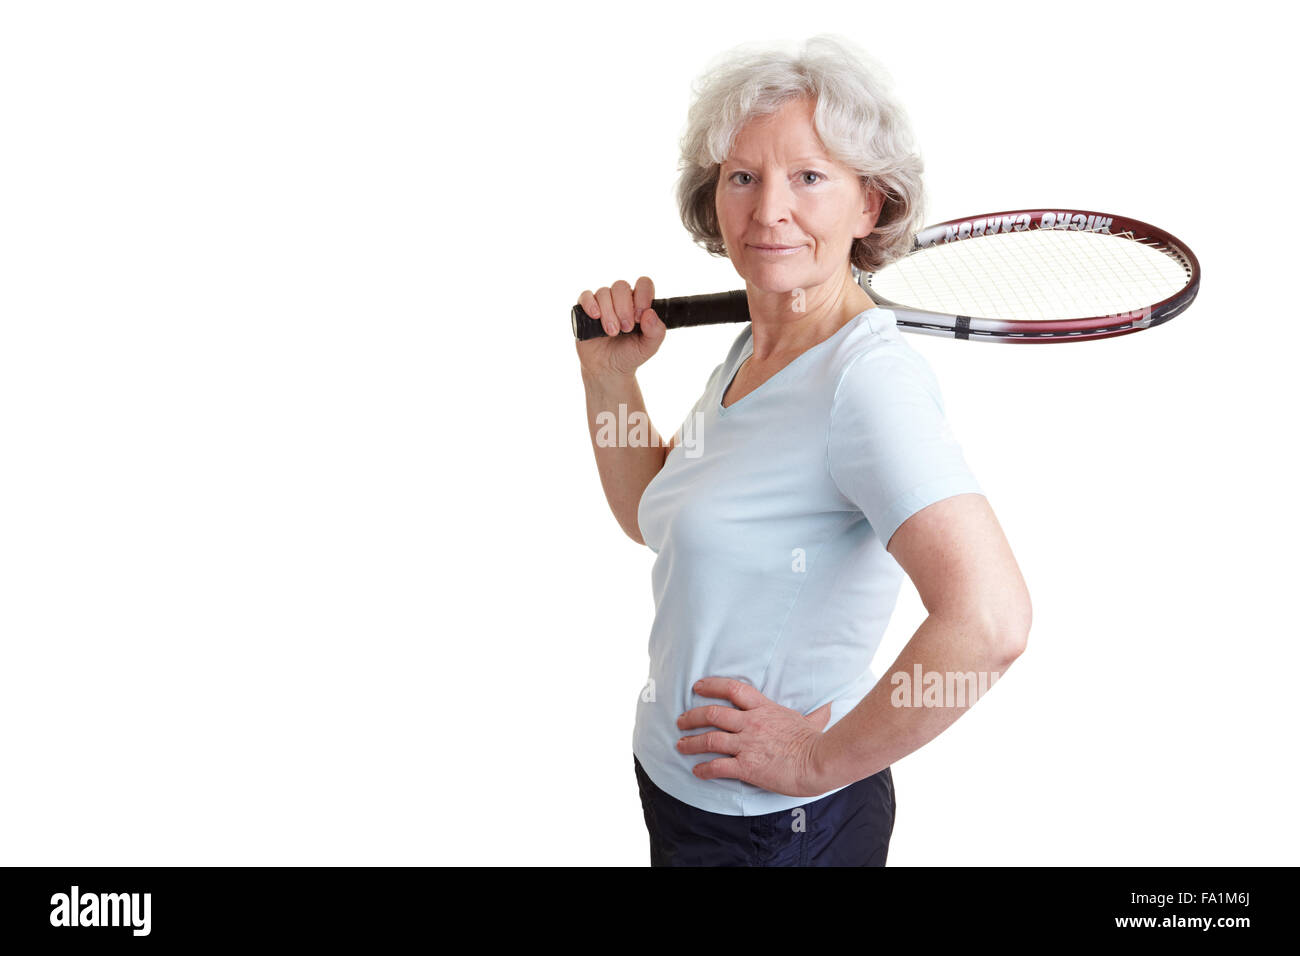 Happy senior woman with a tennis racket Stock Photo